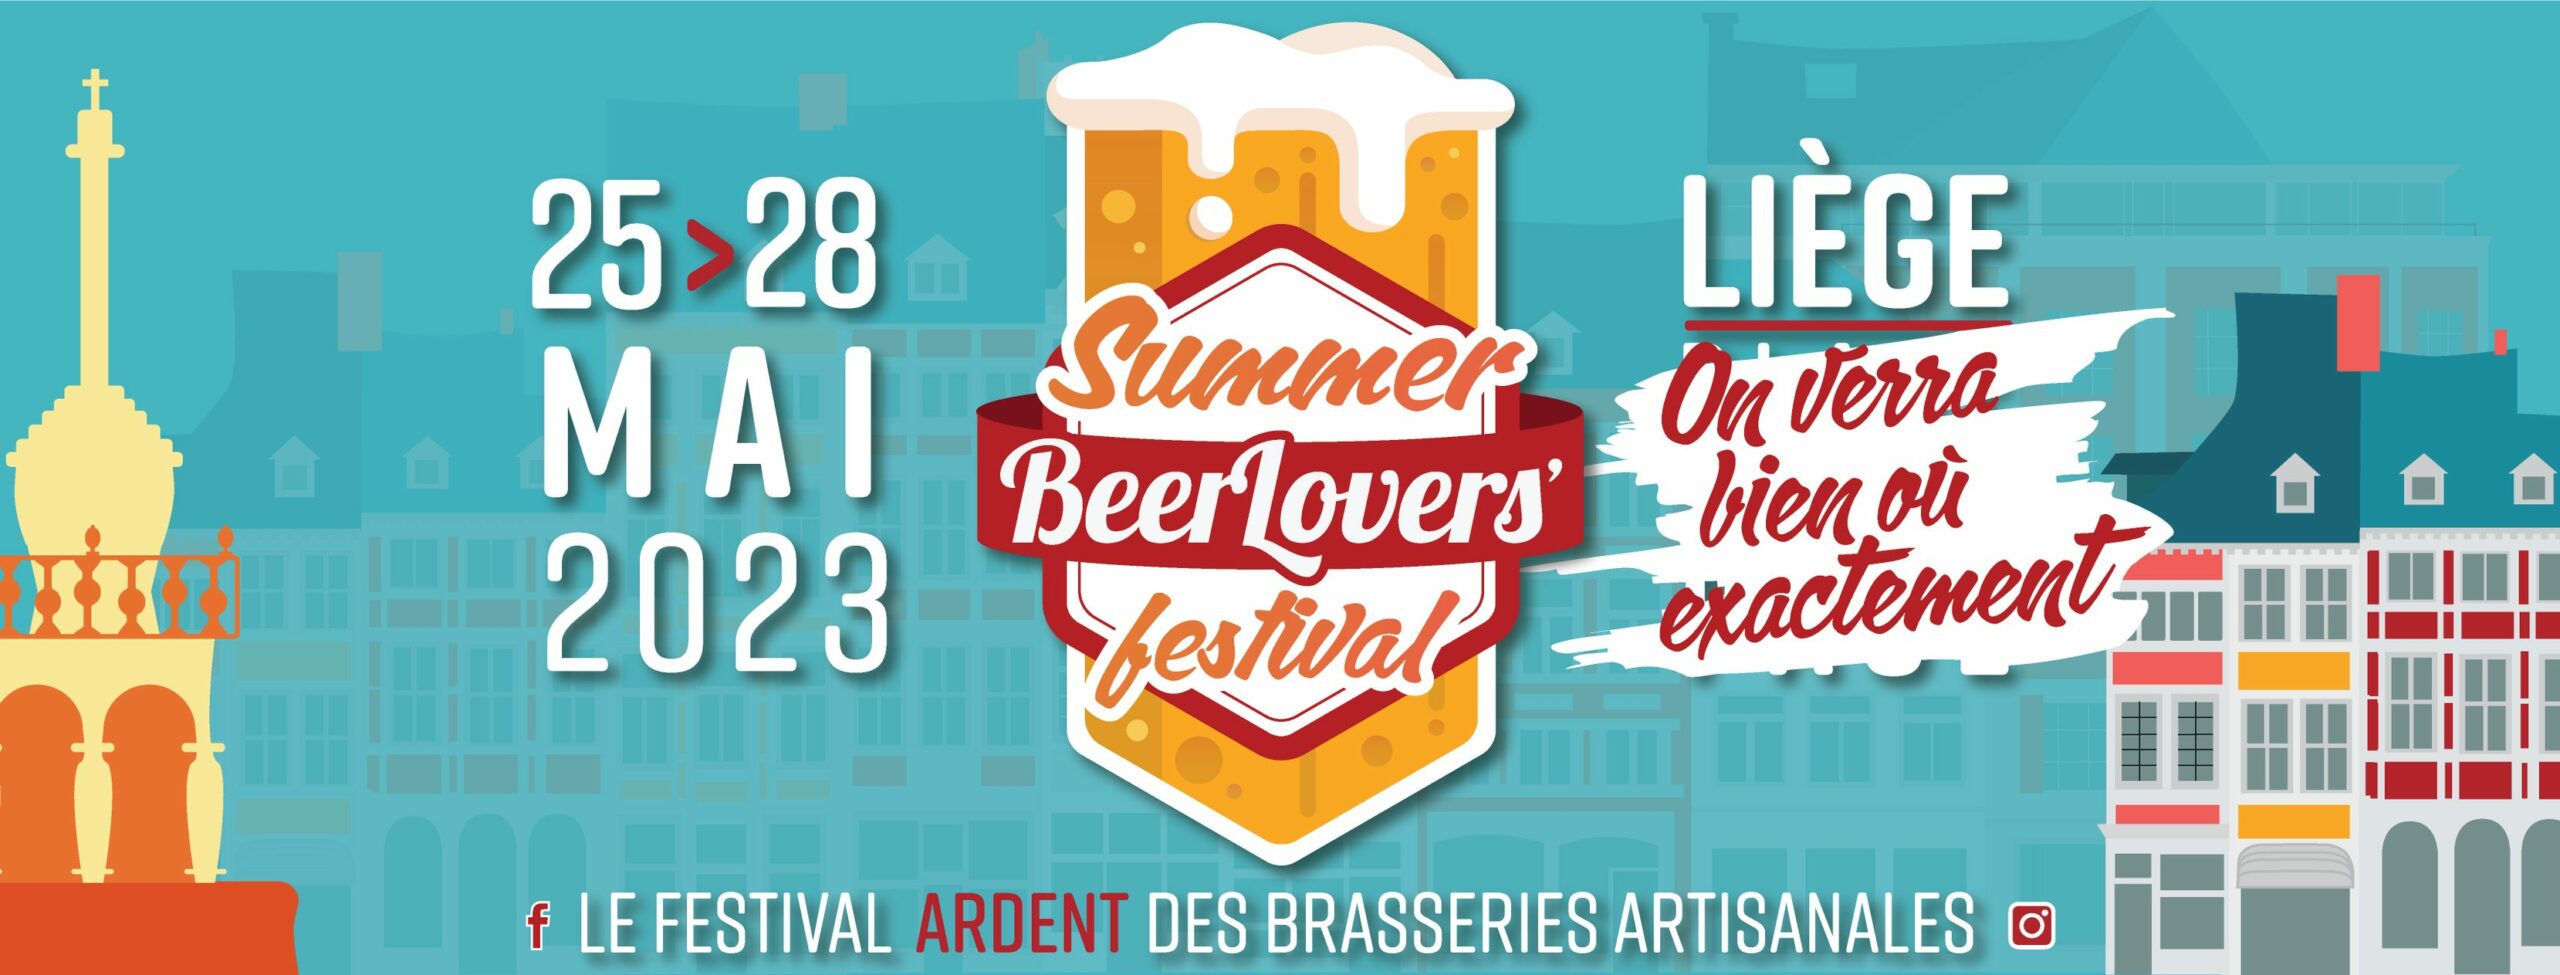 Summer Beer Lovers' Festival 2023 à LIEGE